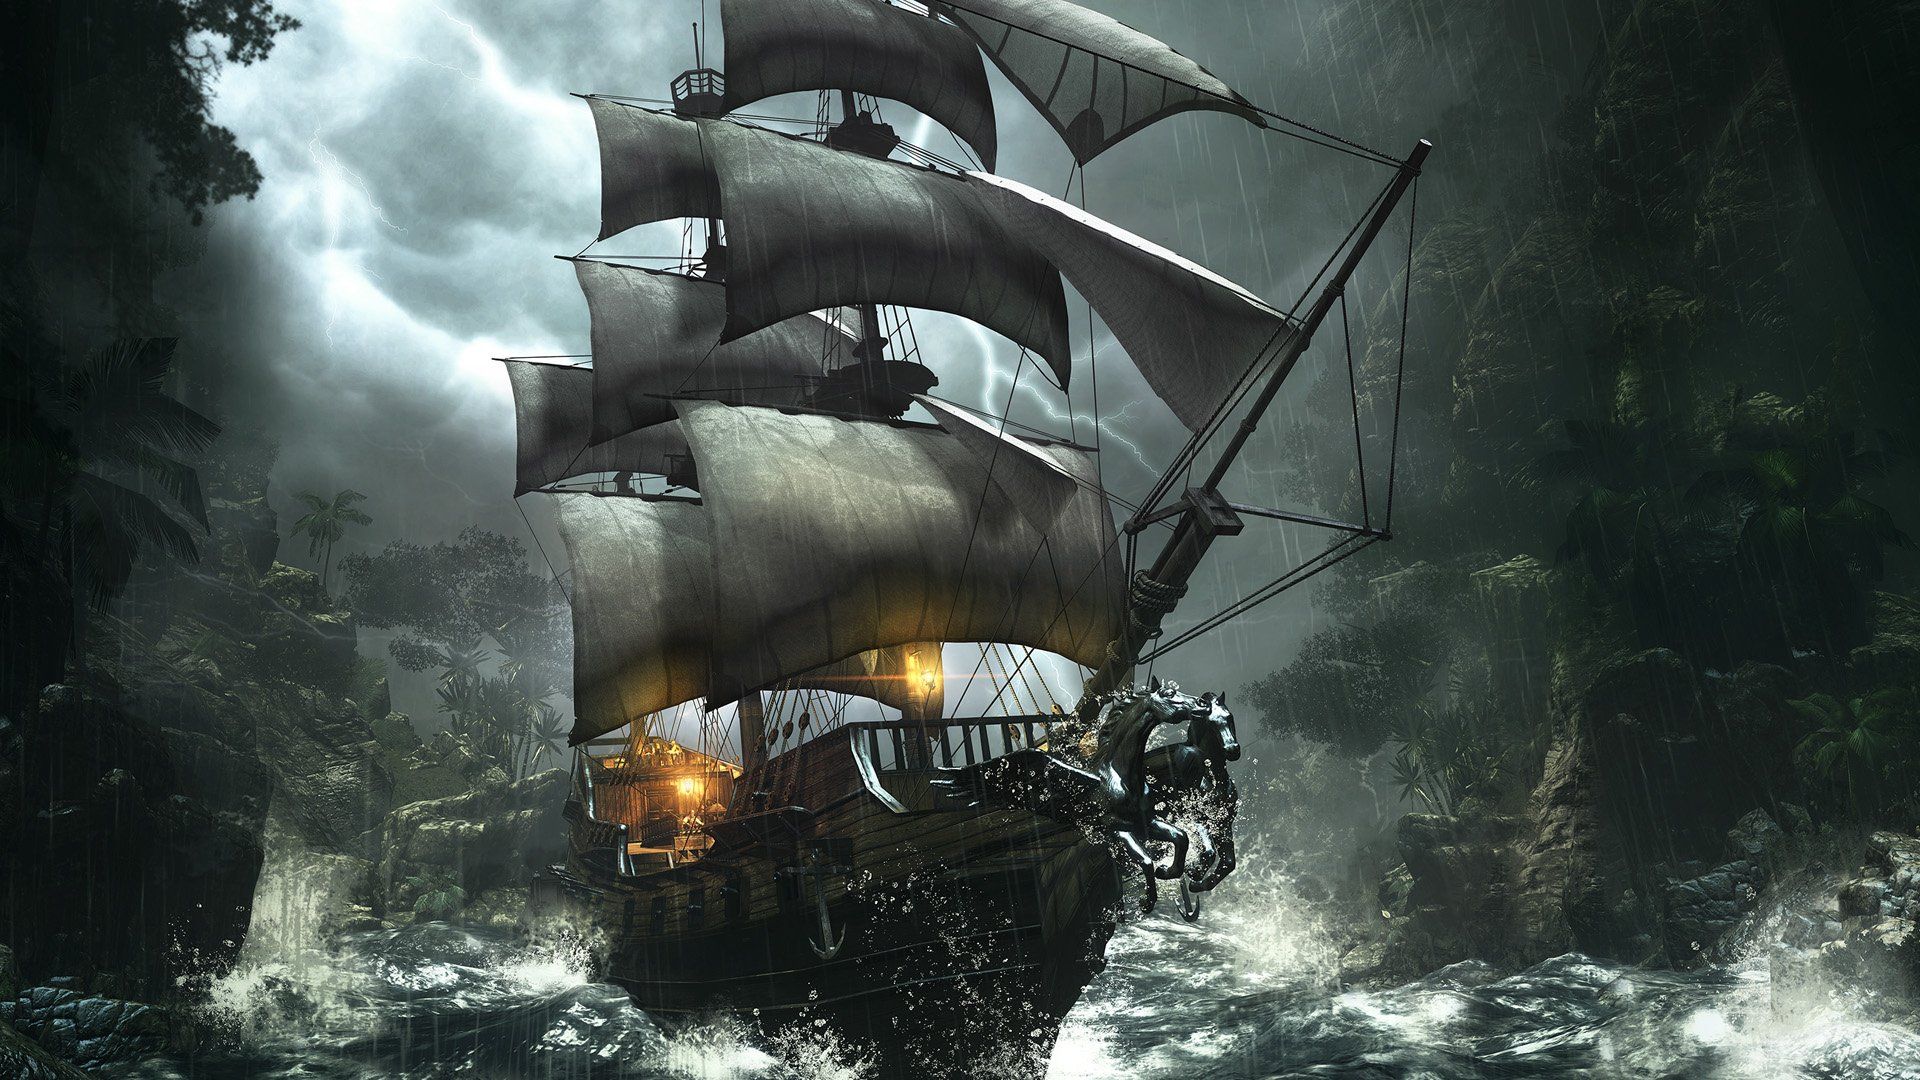 Pirate Ship Background